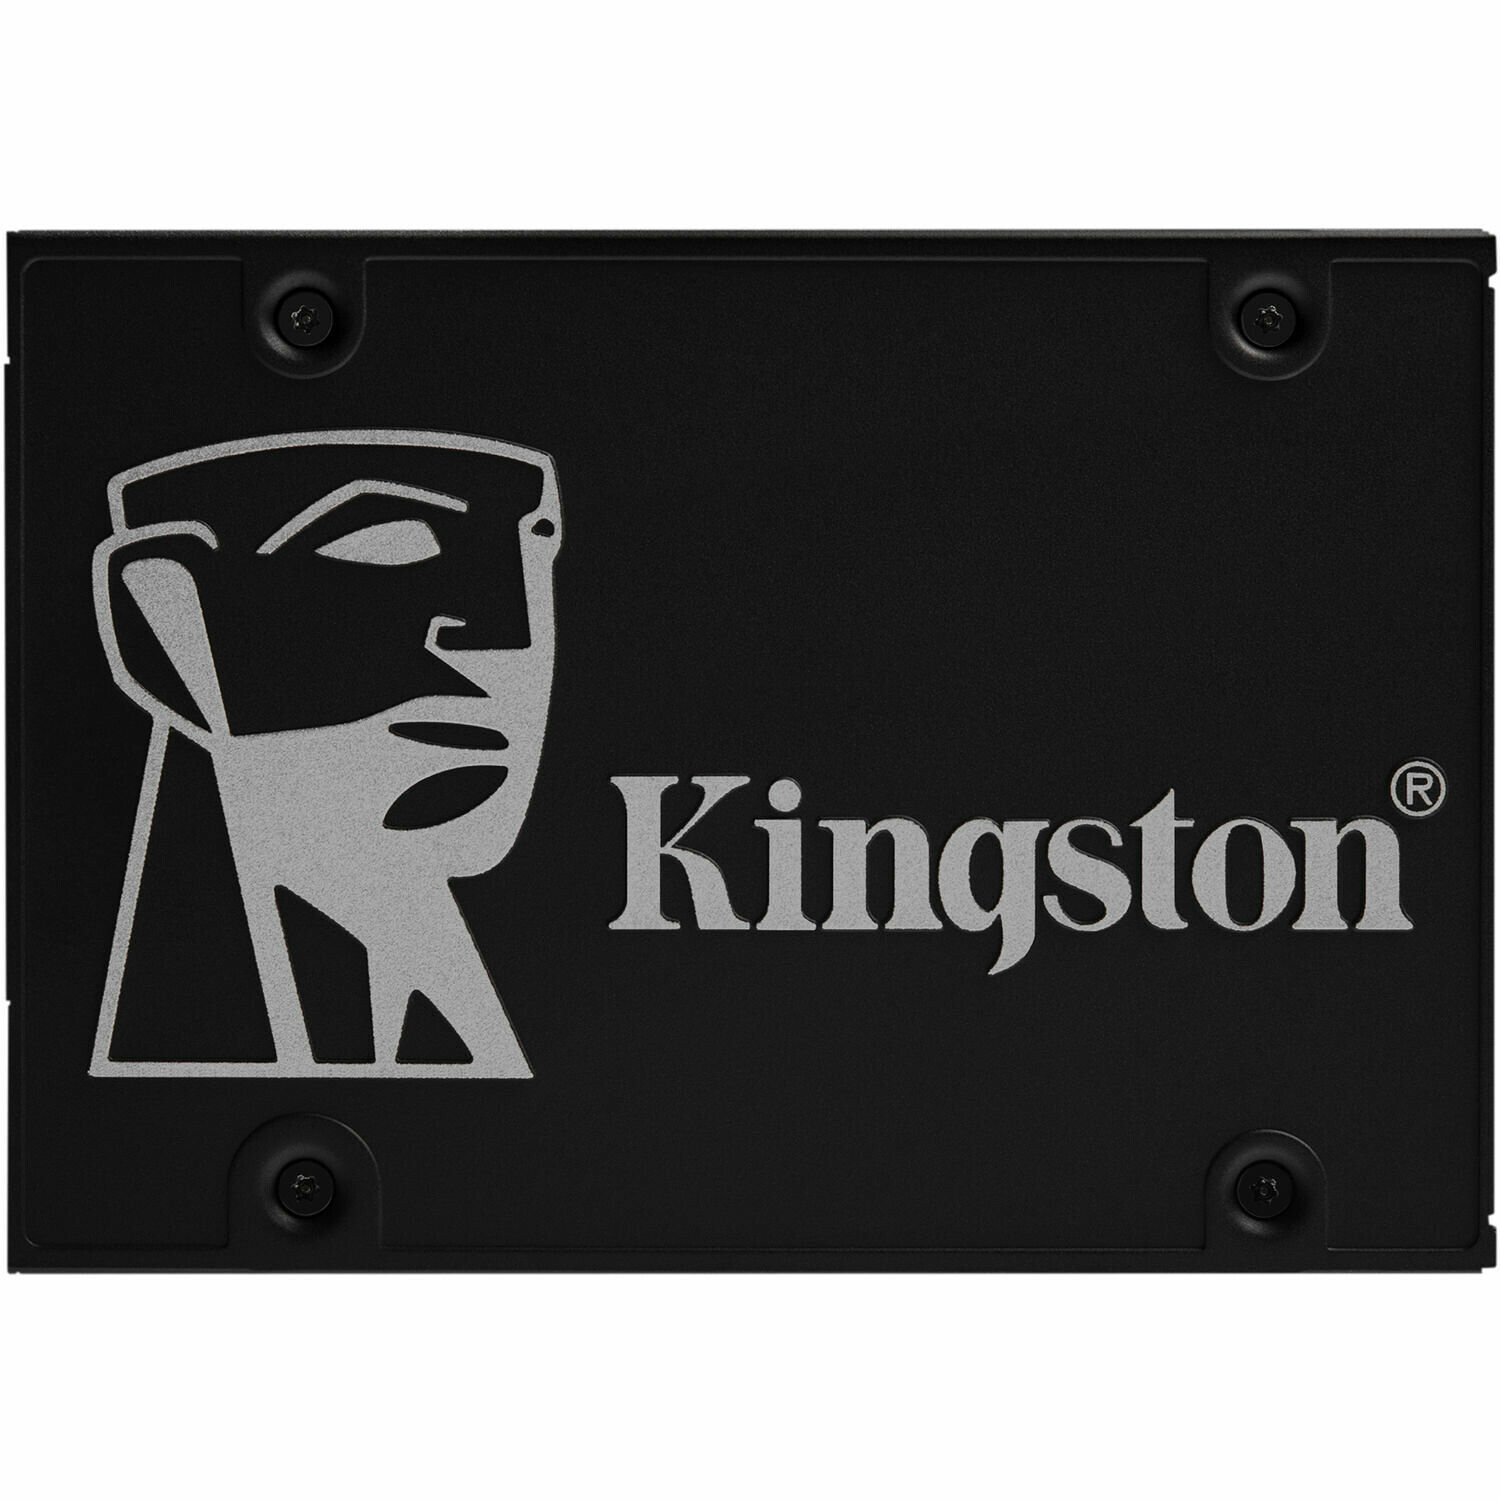 Kingston KC600 512 Go (image:3)